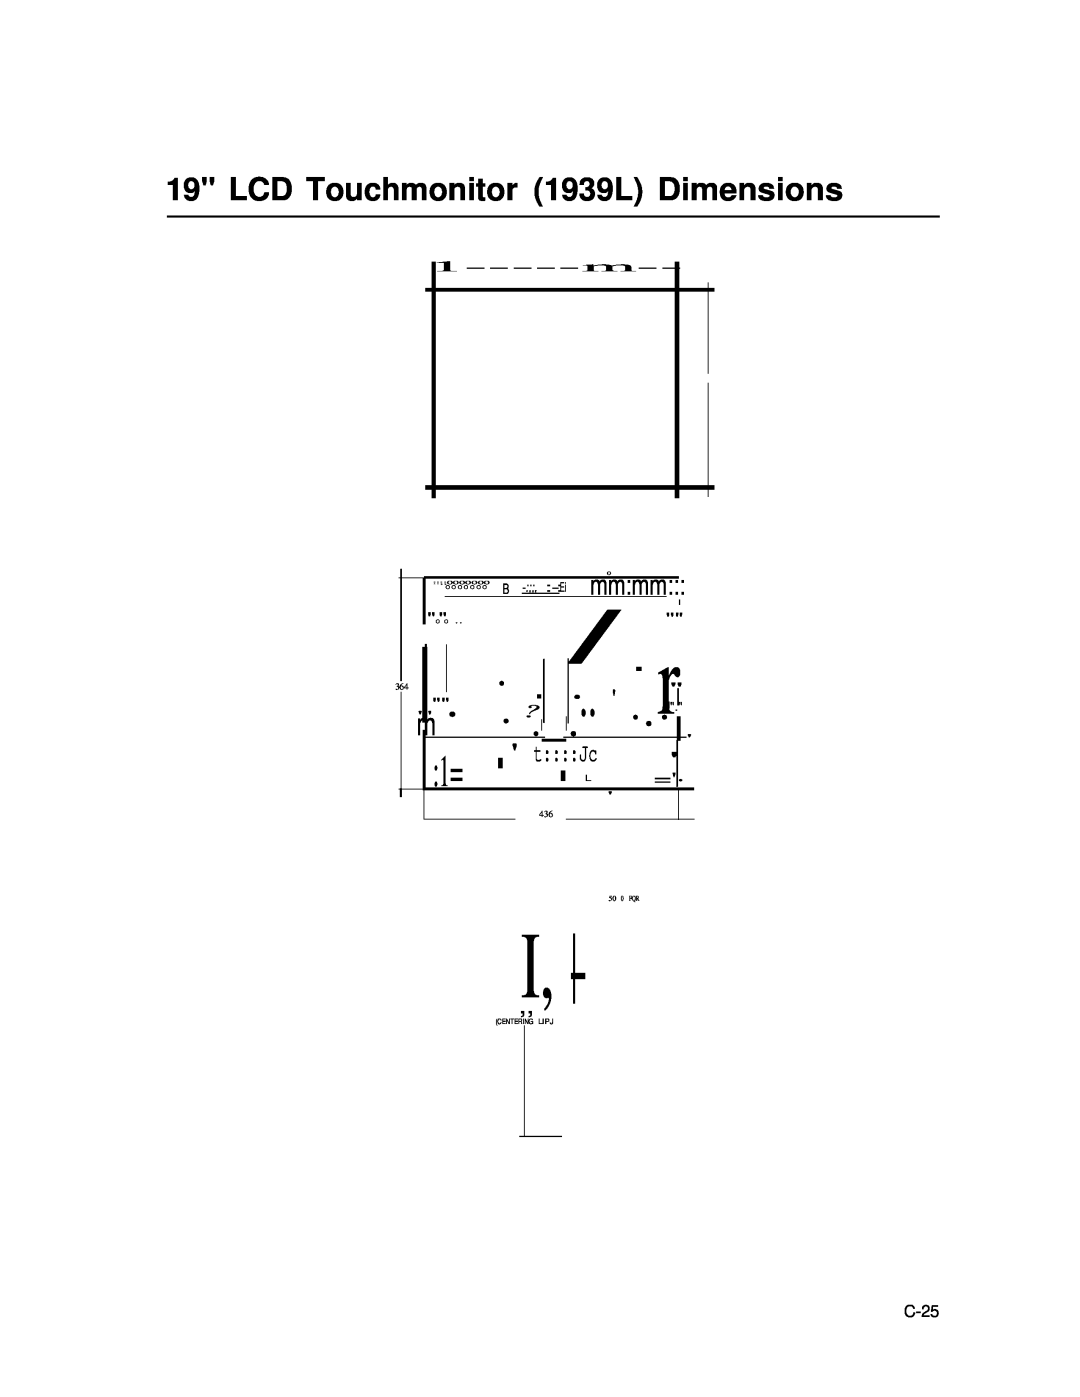 Elo TouchSystems manual C-25, LCD Touchmonitor 1939L Dimensions, mmmm, 50 0 FQR, Centering Lipj, 0000000 